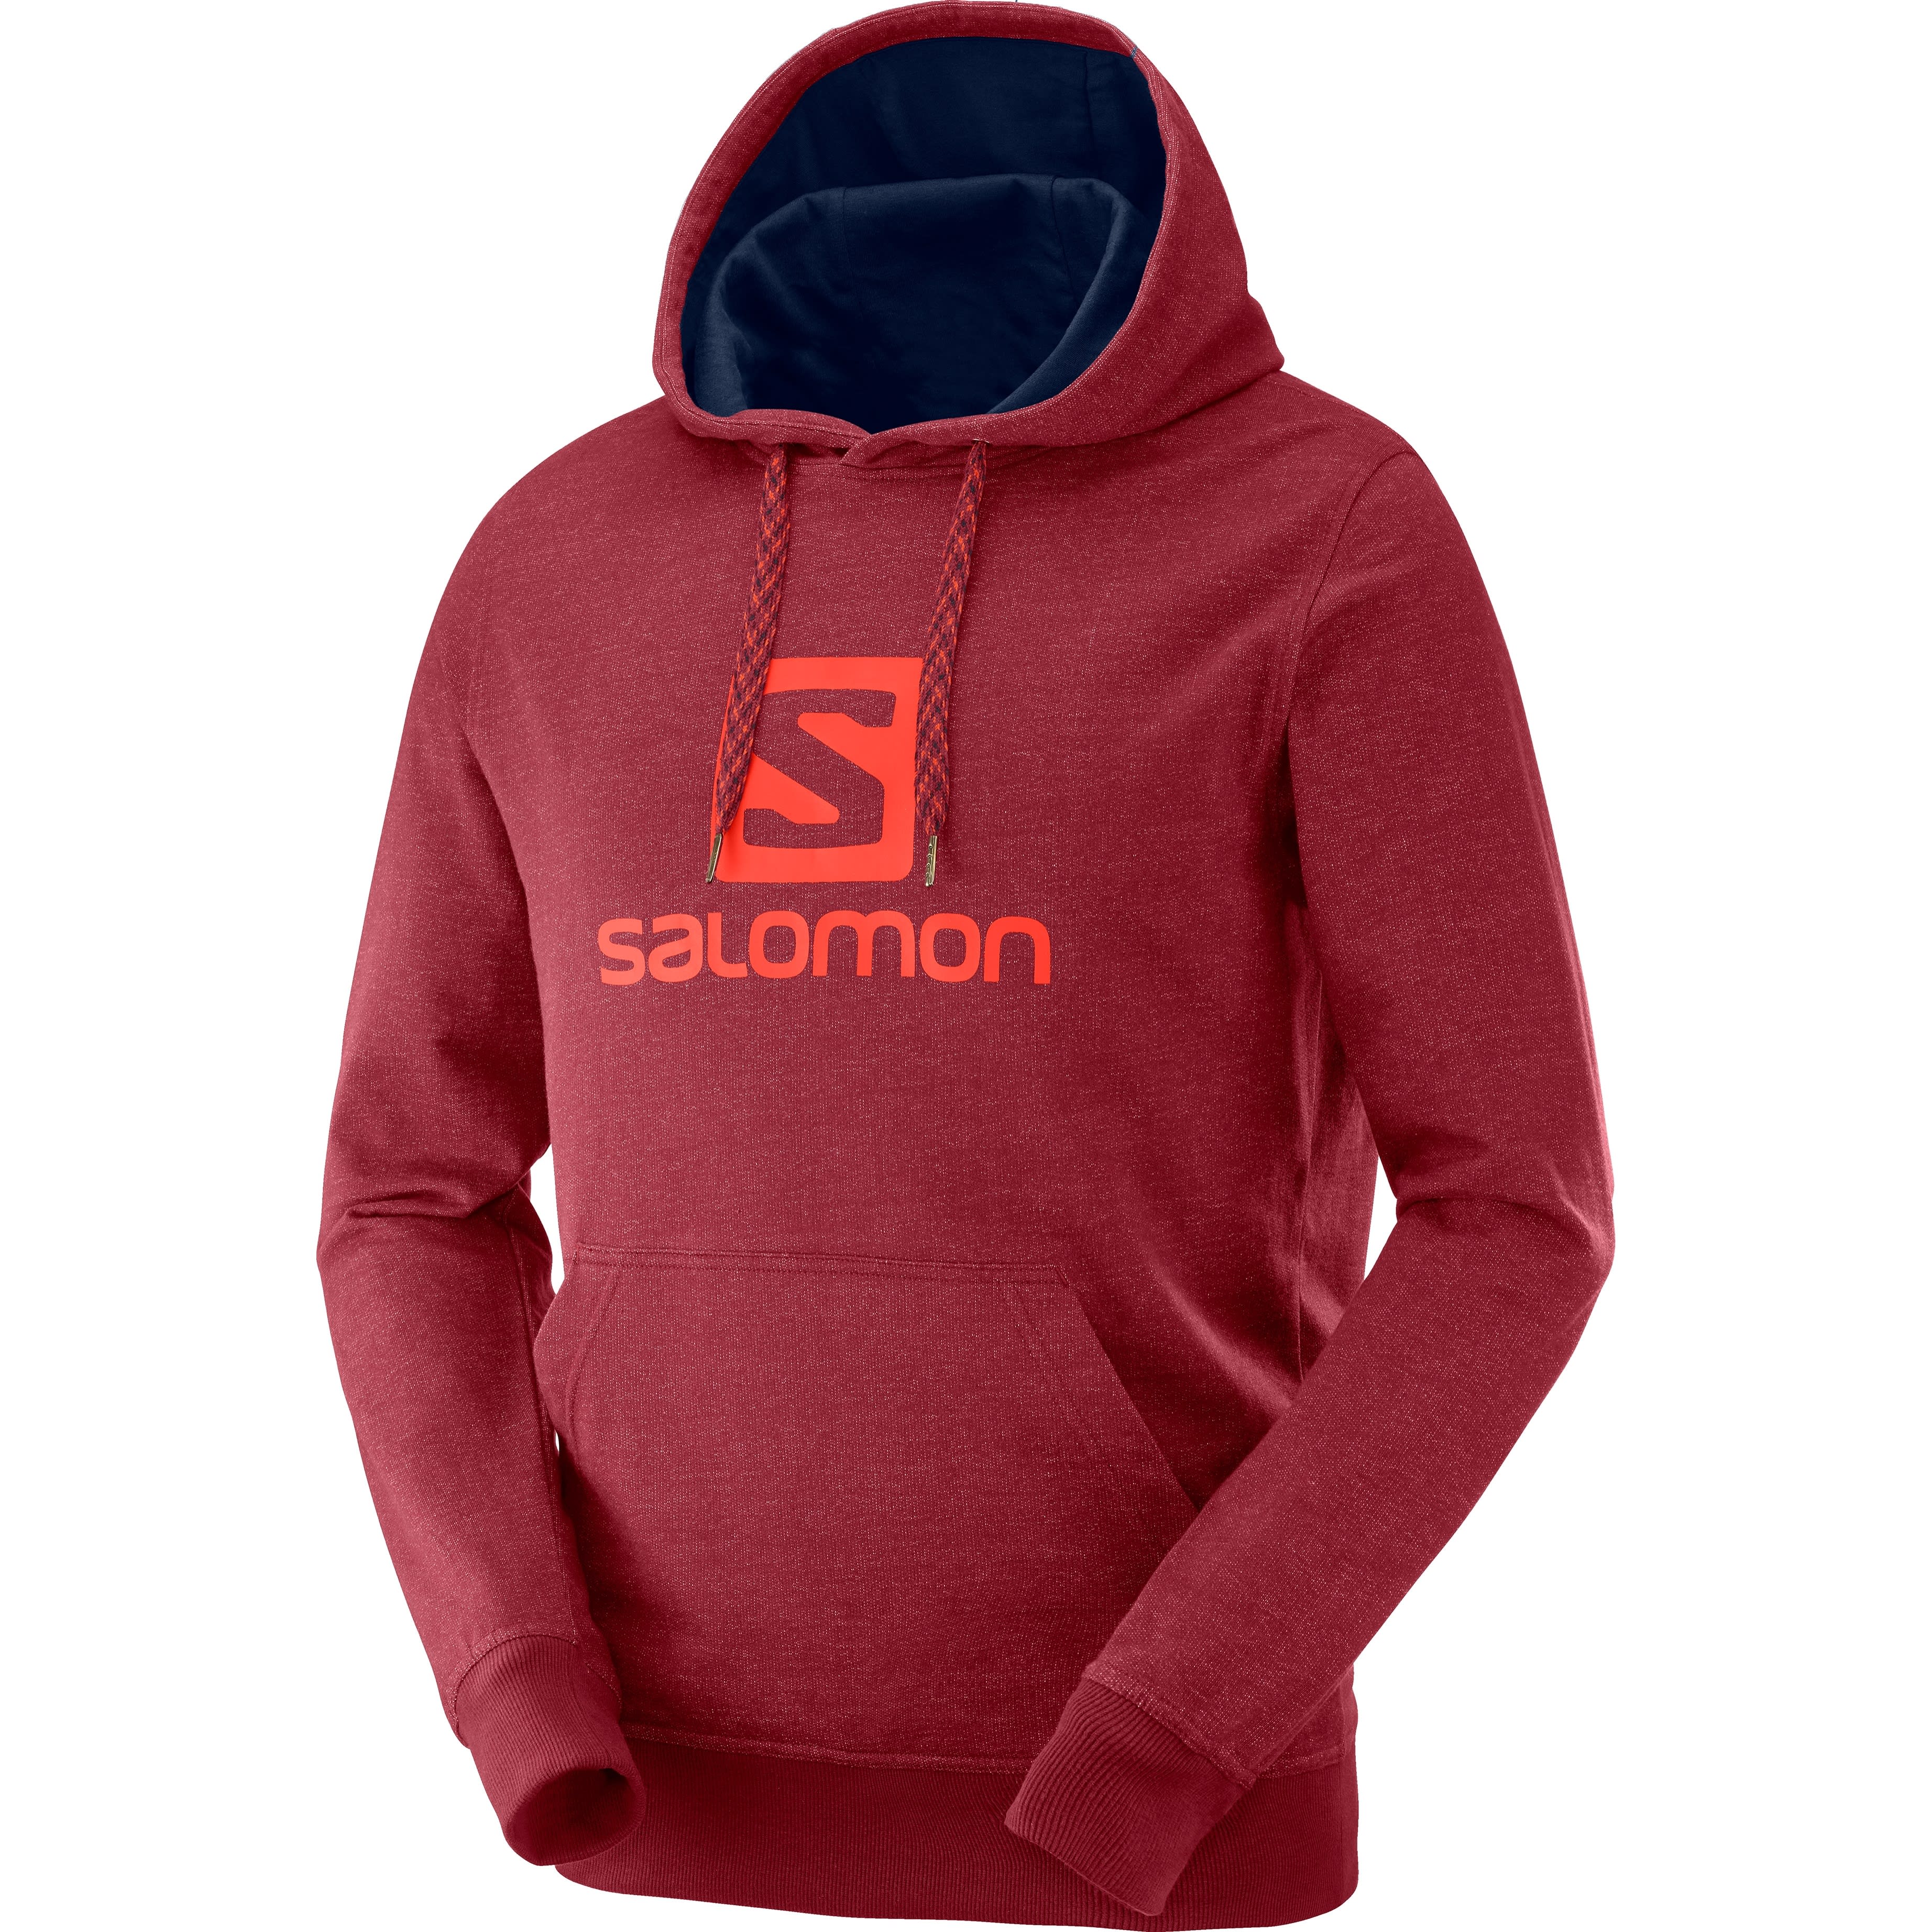 Buy Salomon Men's Logo Hoodie (2019 